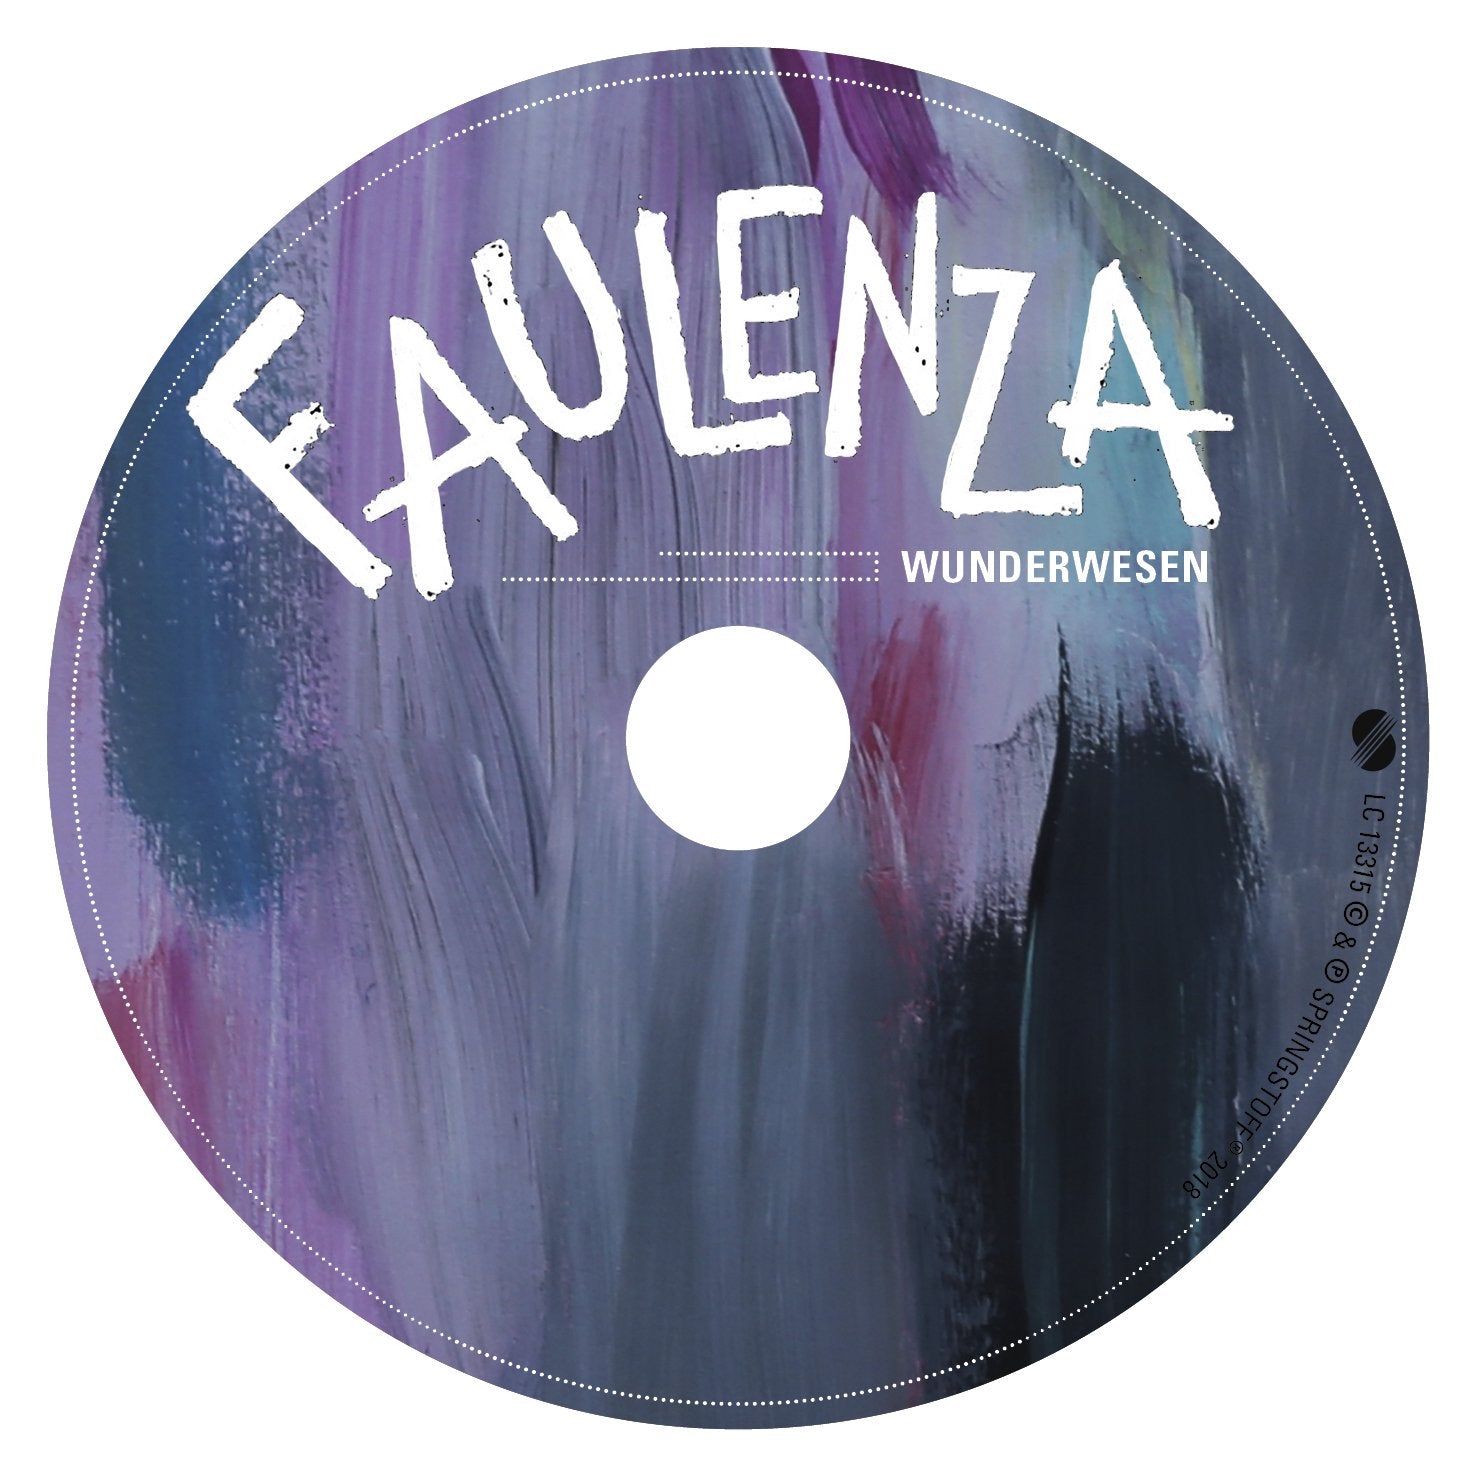 181029_Faulenza Wunderwesen CD label